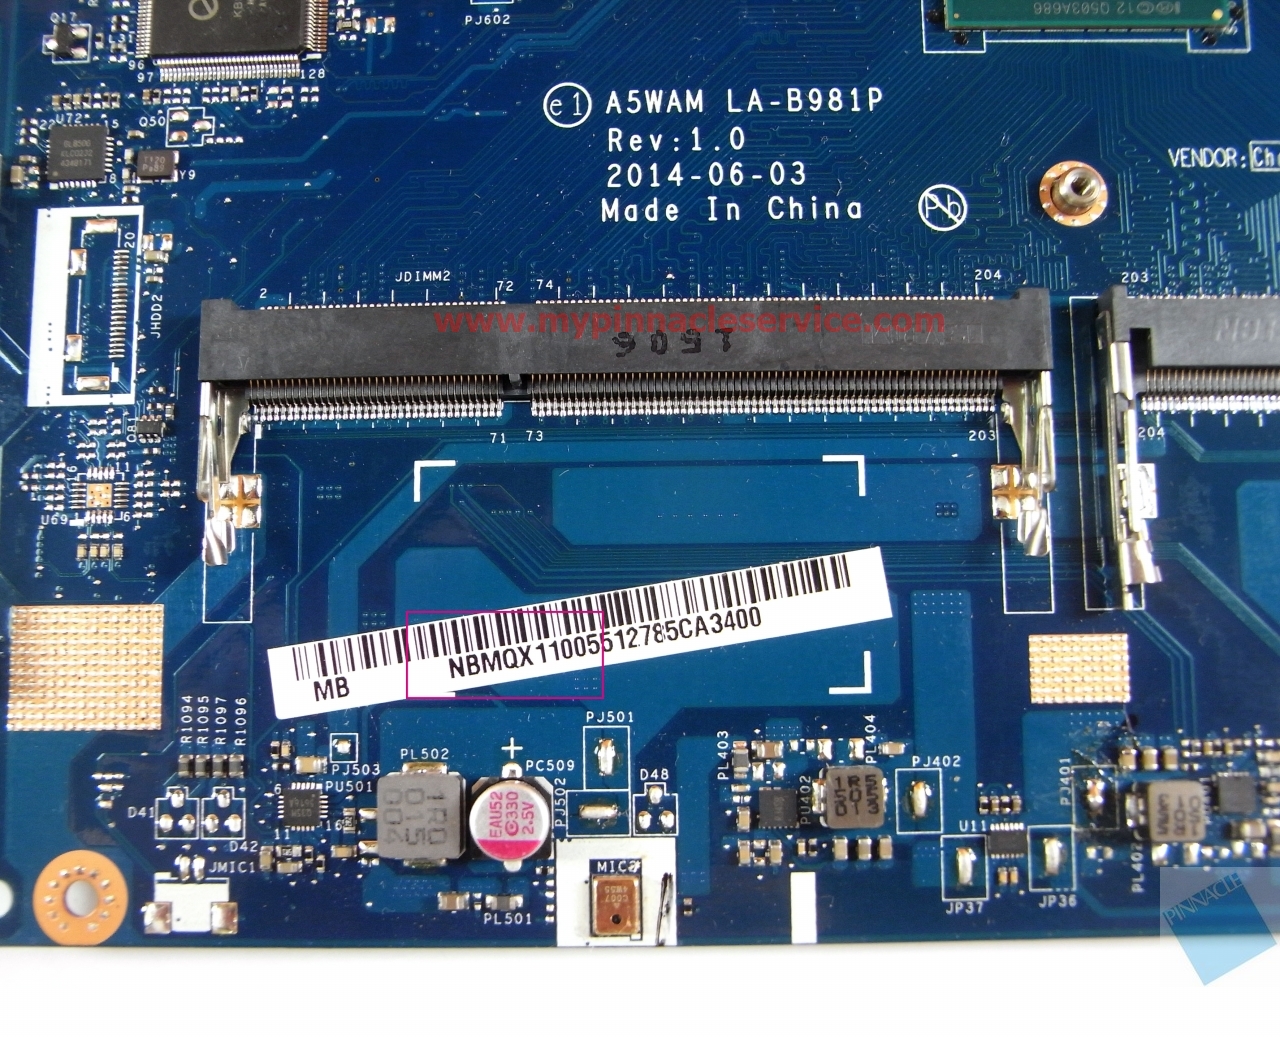 nbmqx11005-n2930-motherboard-for-acer-aspire-e5-511g-a5wam-la-b981p-rimg0014-1.jpg